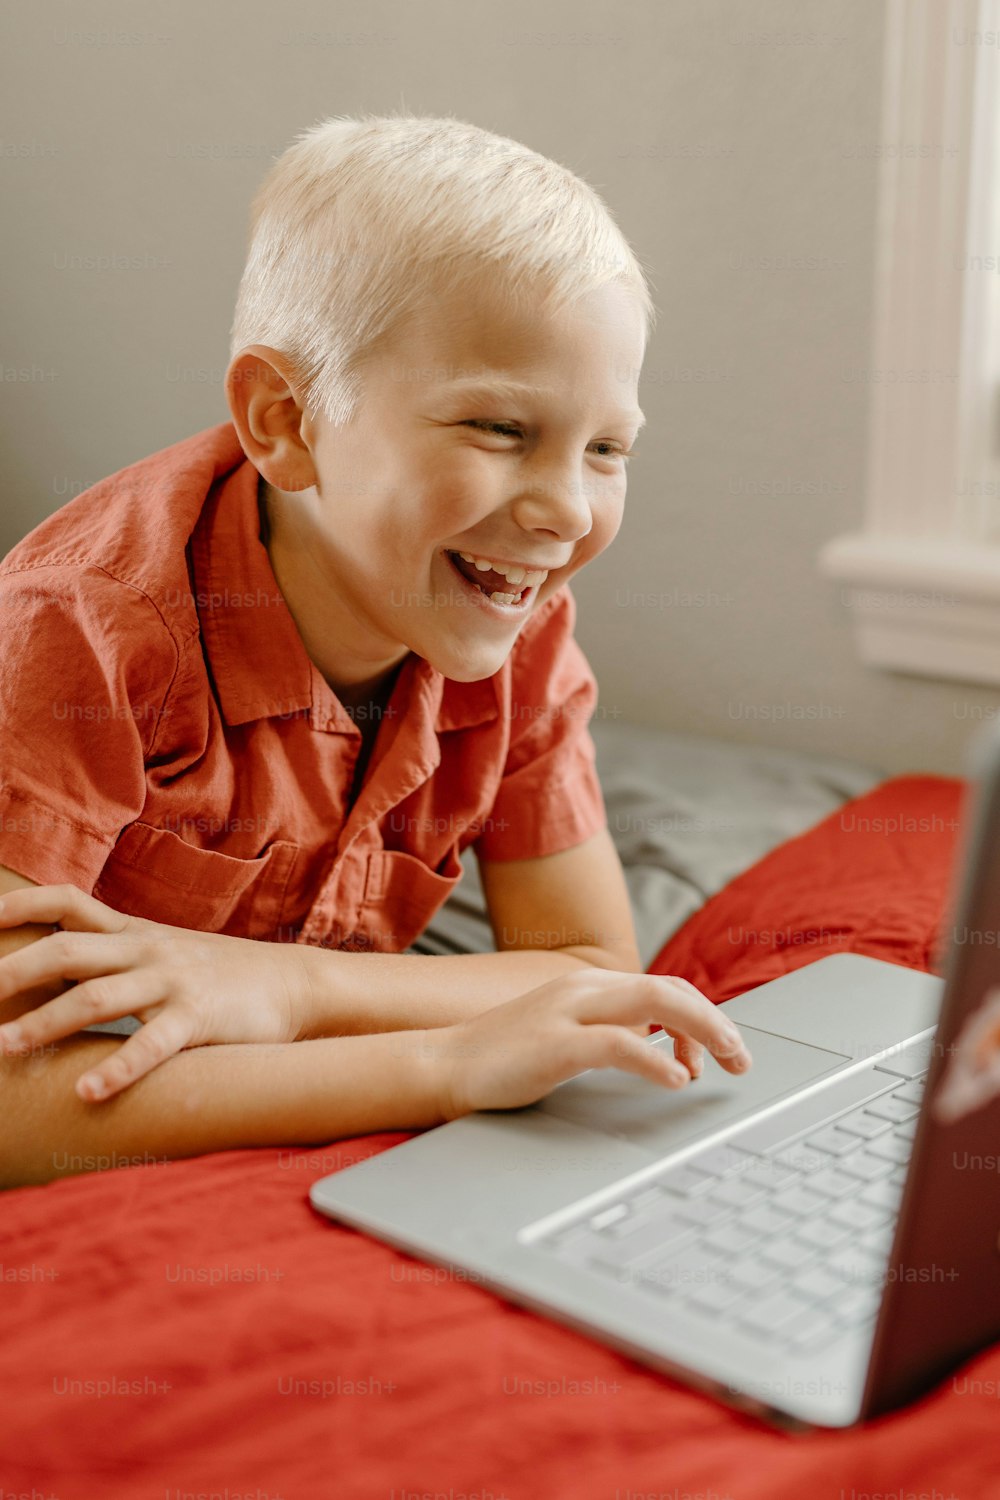 Un ragazzo sorride mentre guarda un computer portatile